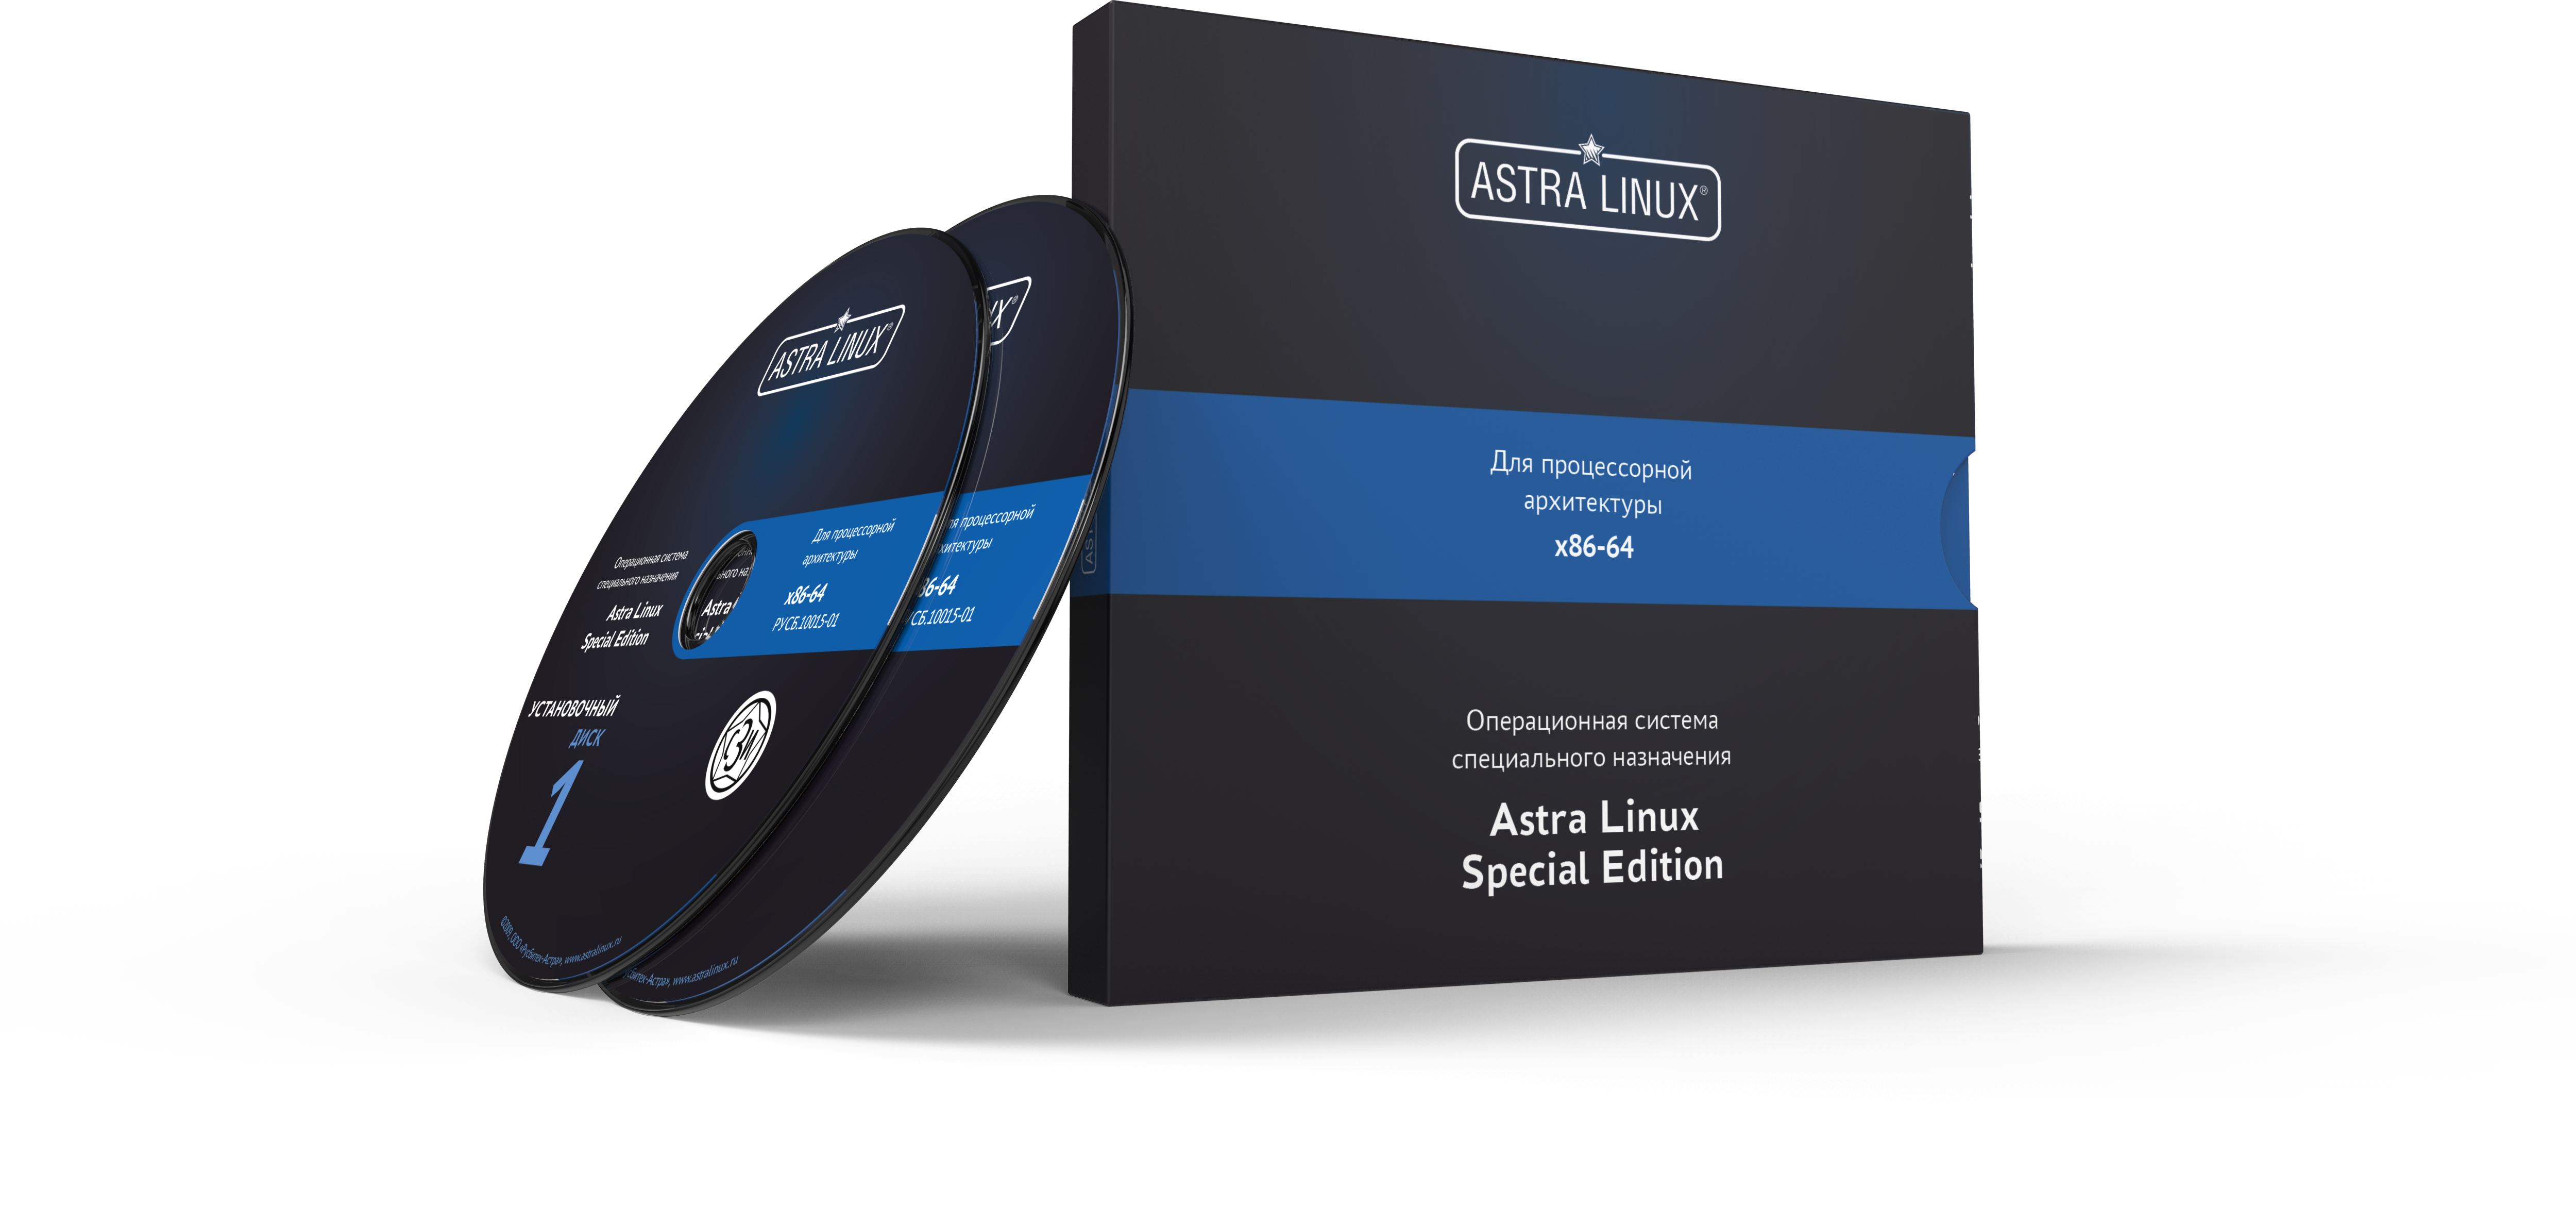 Astra Linux Special Edition 1.7 - Орел, электронный, без огр. срока, ТП "Стандарт" на 24 мес.